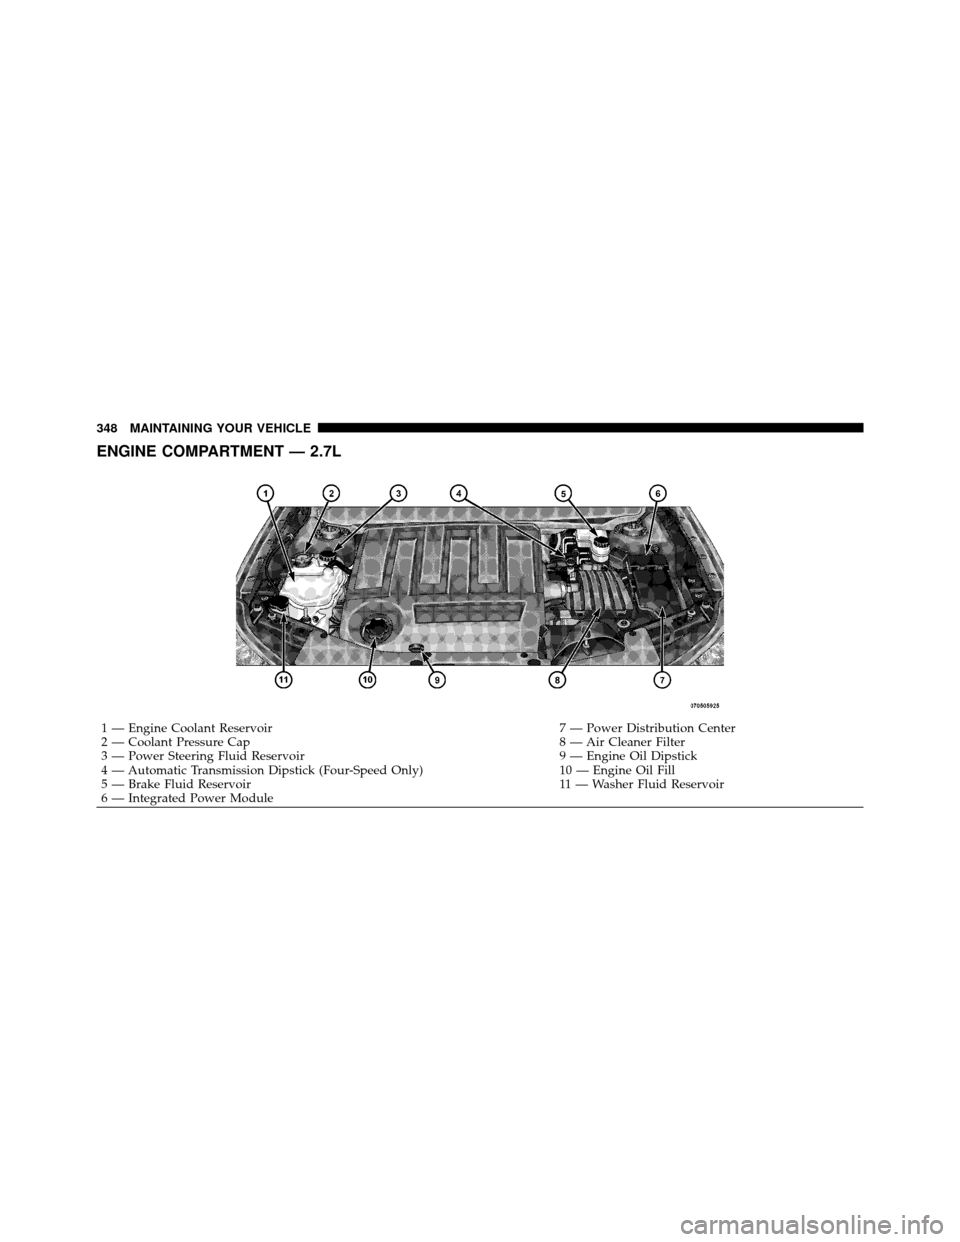 DODGE AVENGER 2010 2.G Owners Manual ENGINE COMPARTMENT — 2.7L
1 — Engine Coolant Reservoir7 — Power Distribution Center
2 — Coolant Pressure Cap 8 — Air Cleaner Filter
3 — Power Steering Fluid Reservoir 9 — Engine Oil Dips